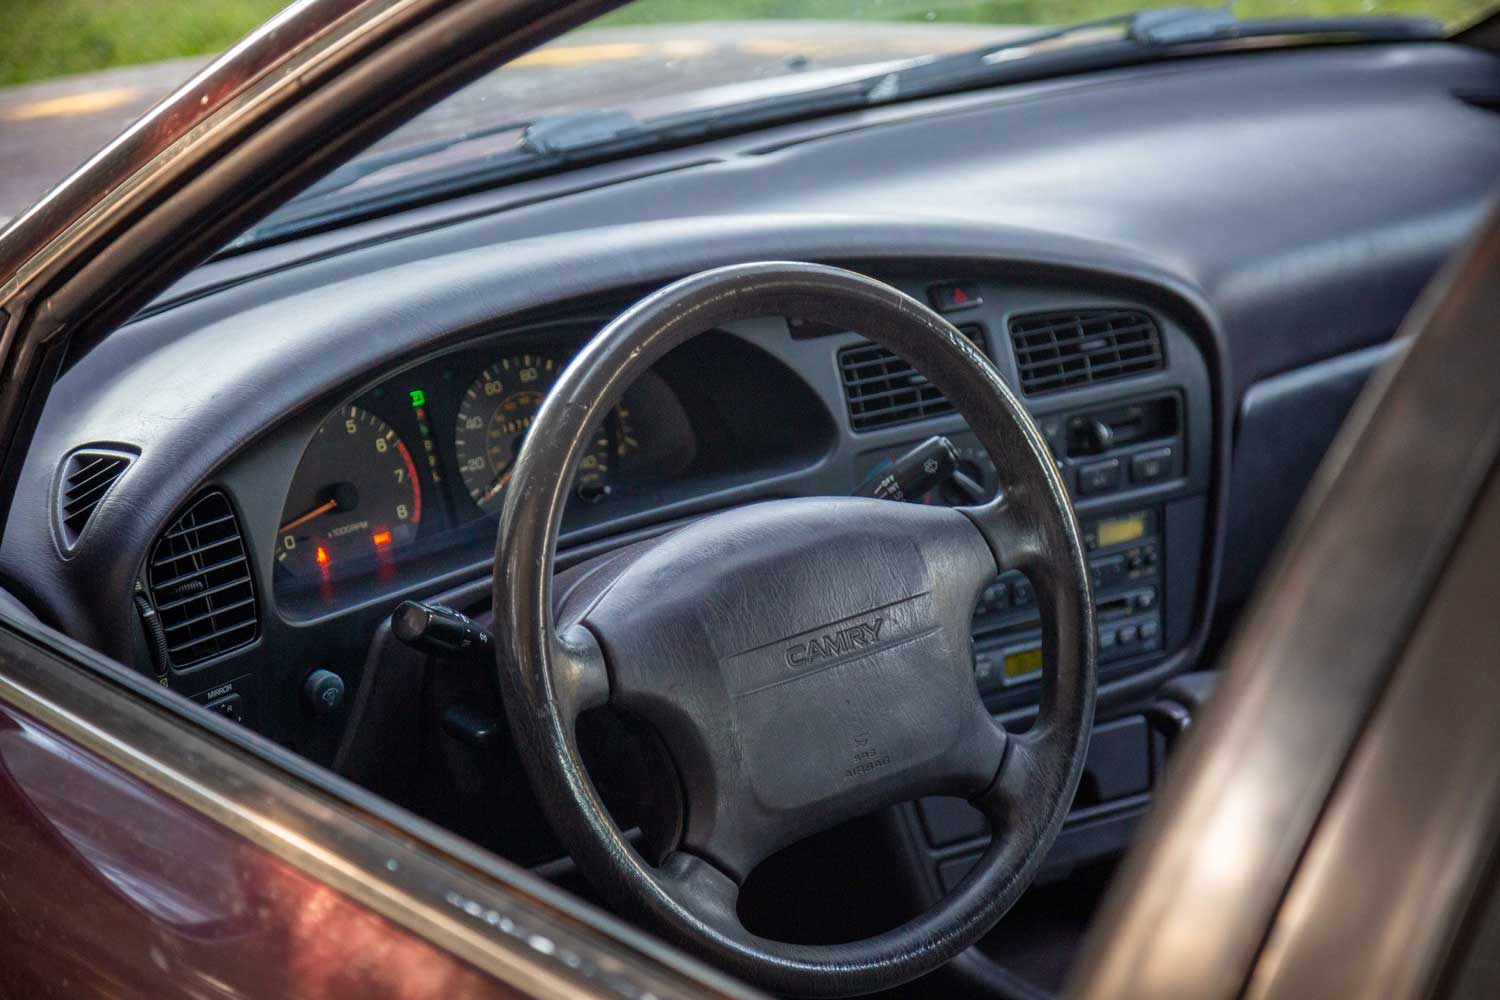 1993 Toyota Camry LE interior dashboard